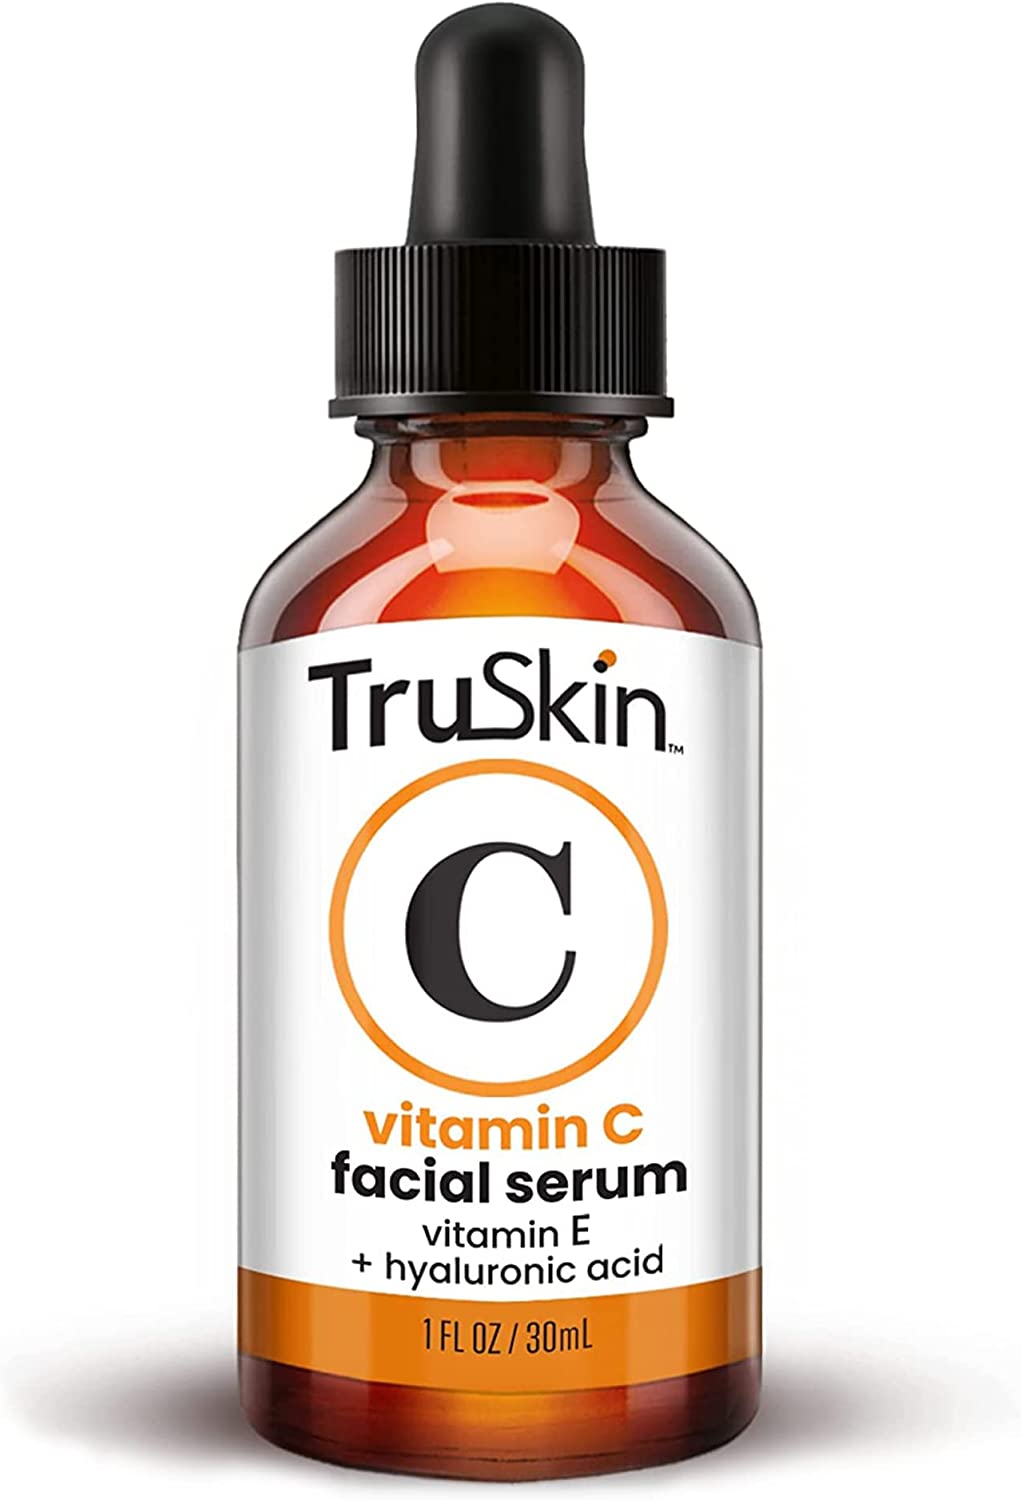 TruSkin Vitamin C Serum for Face – Anti Aging Face Serum with Vitamin C, Hyaluronic Acid, Vitamin E – Brightening Serum for Dark Spots, Even Skin Tone, Eye Area, Fine Lines & Wrinkles, 1 Fl Oz